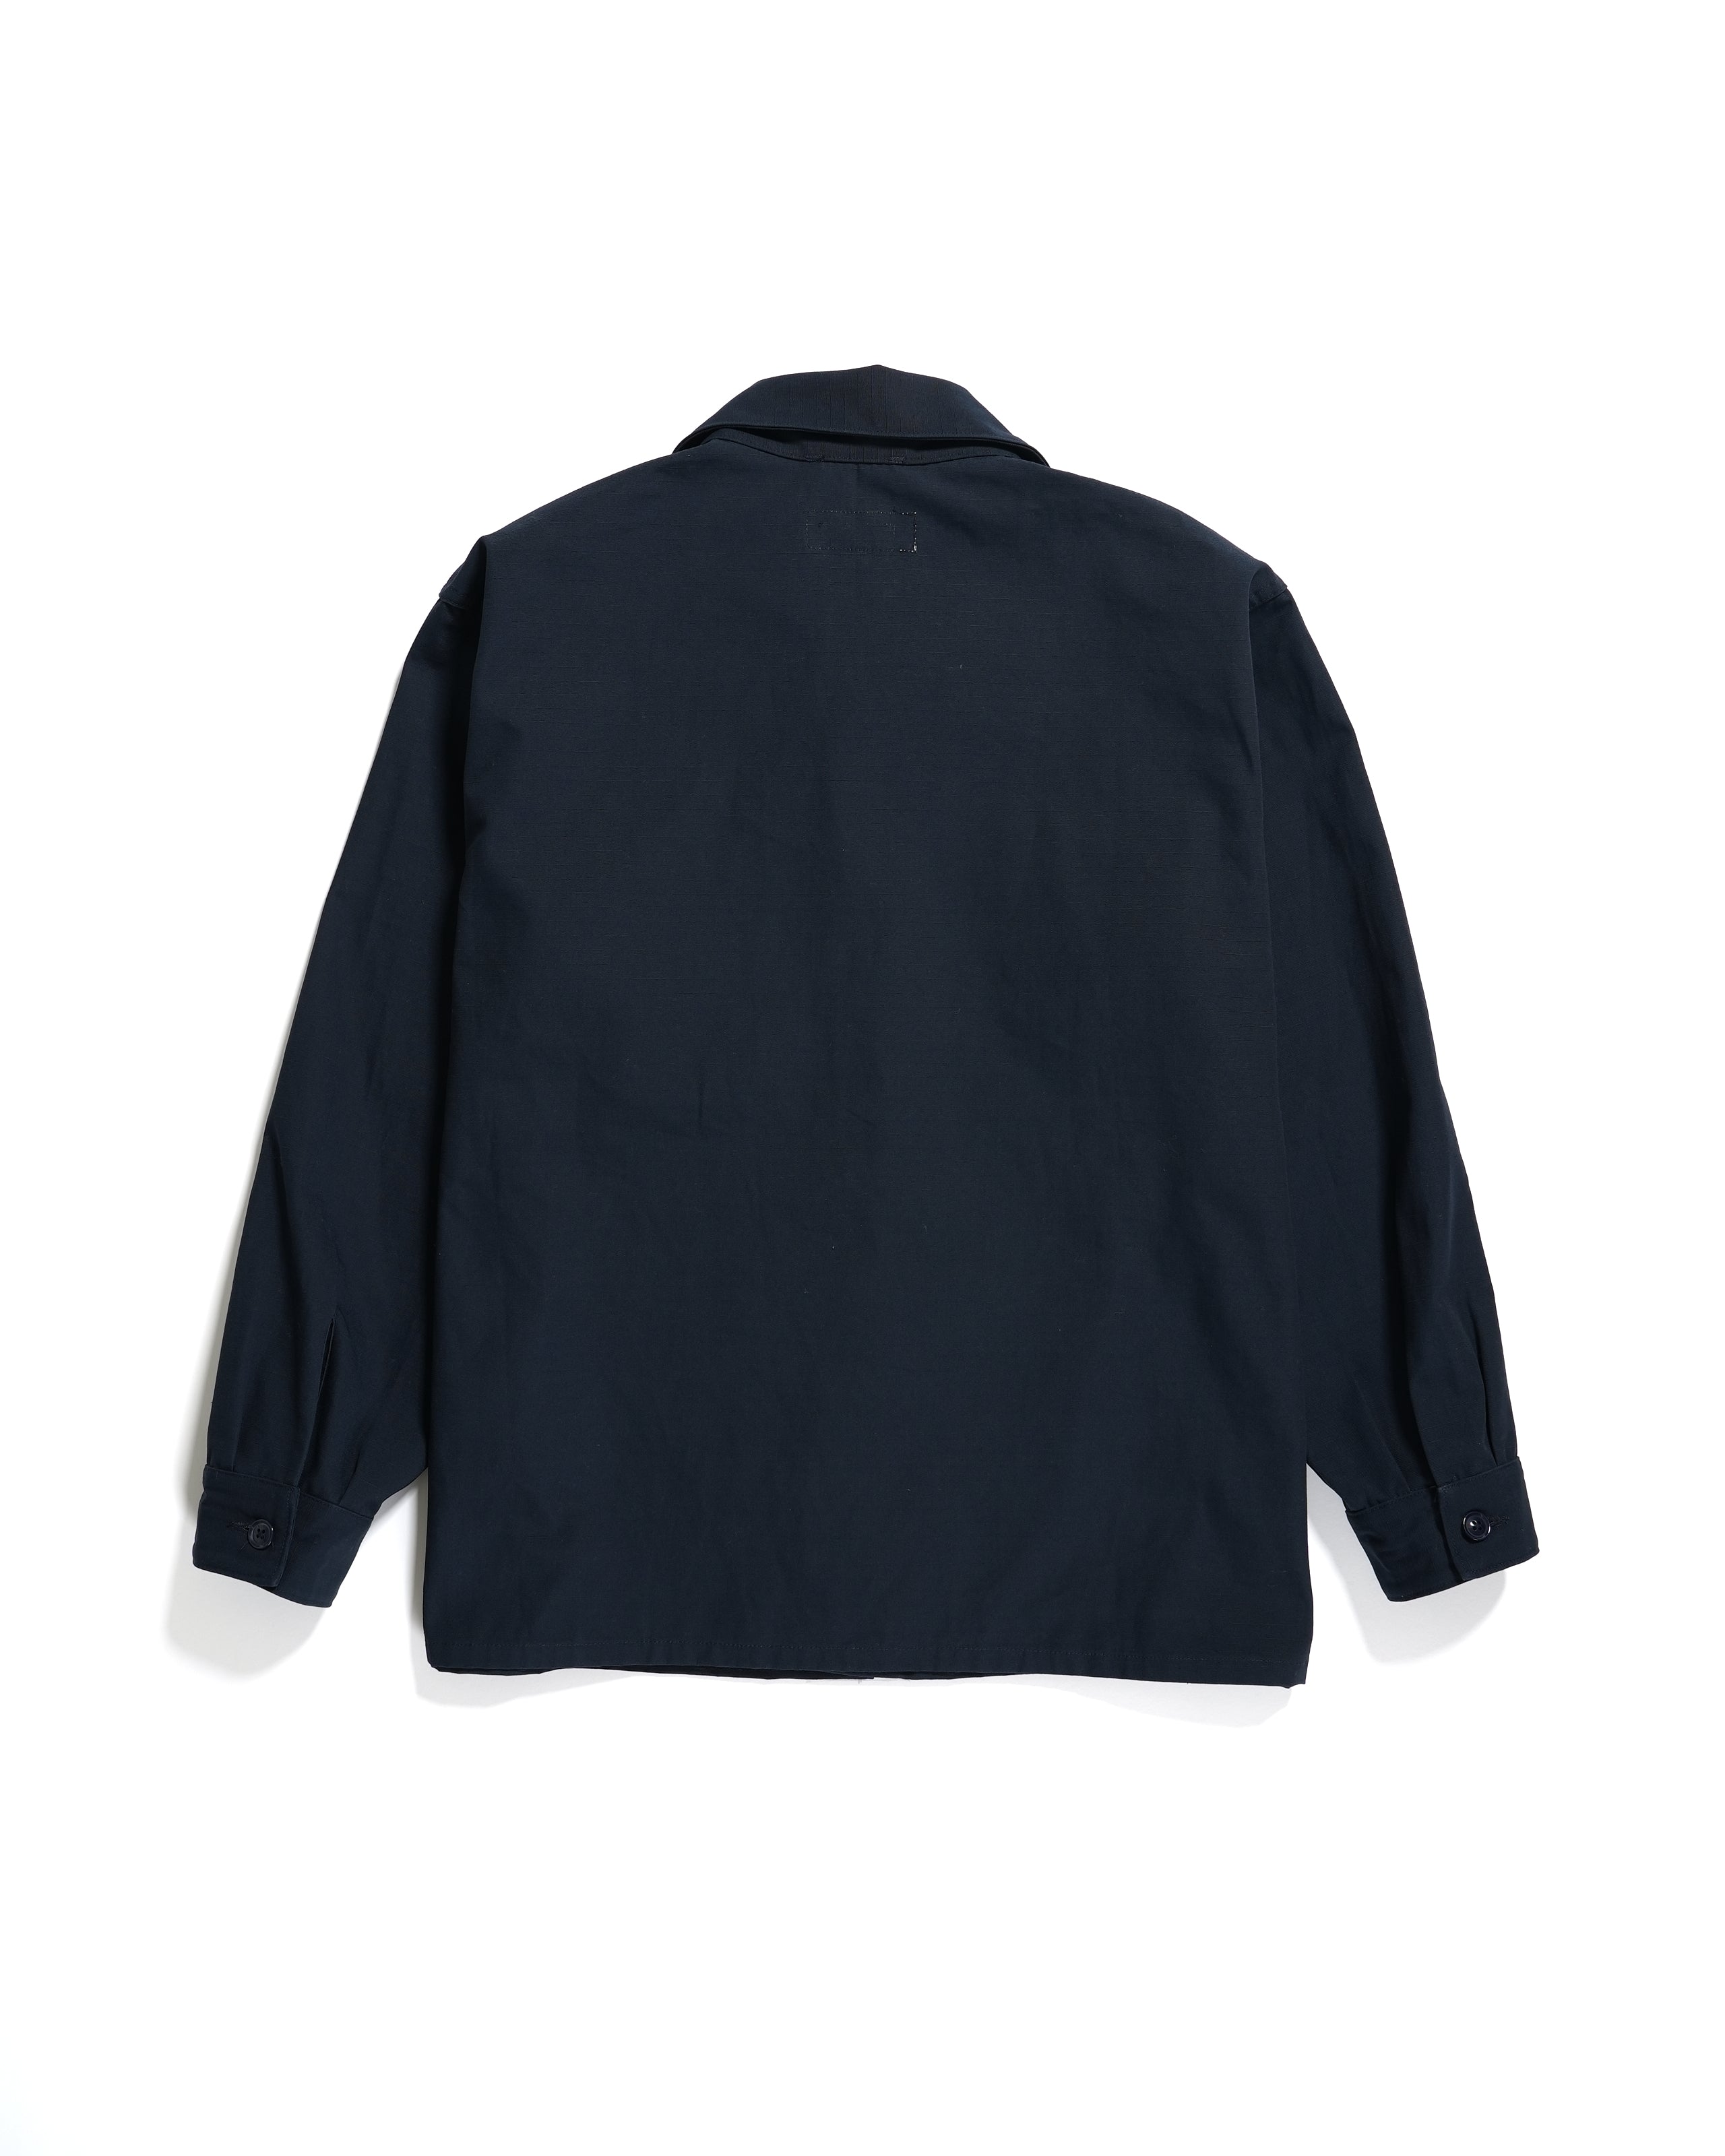 MC Shirt Jacket - Dark Navy Heavyweight Cotton Ripstop